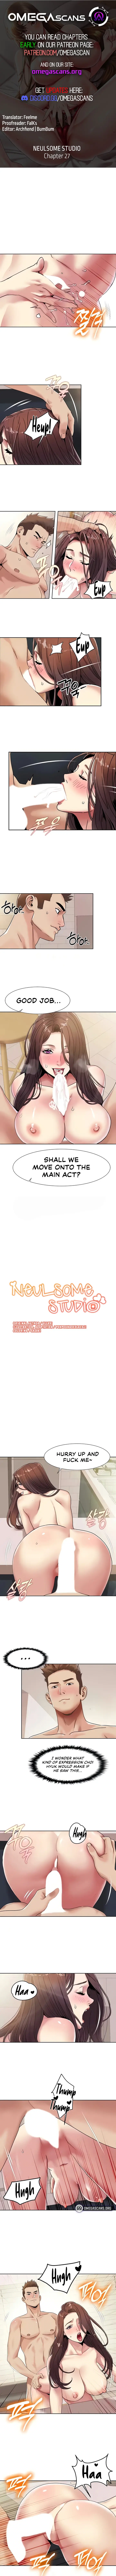 neulsome-studio-chap-27-0